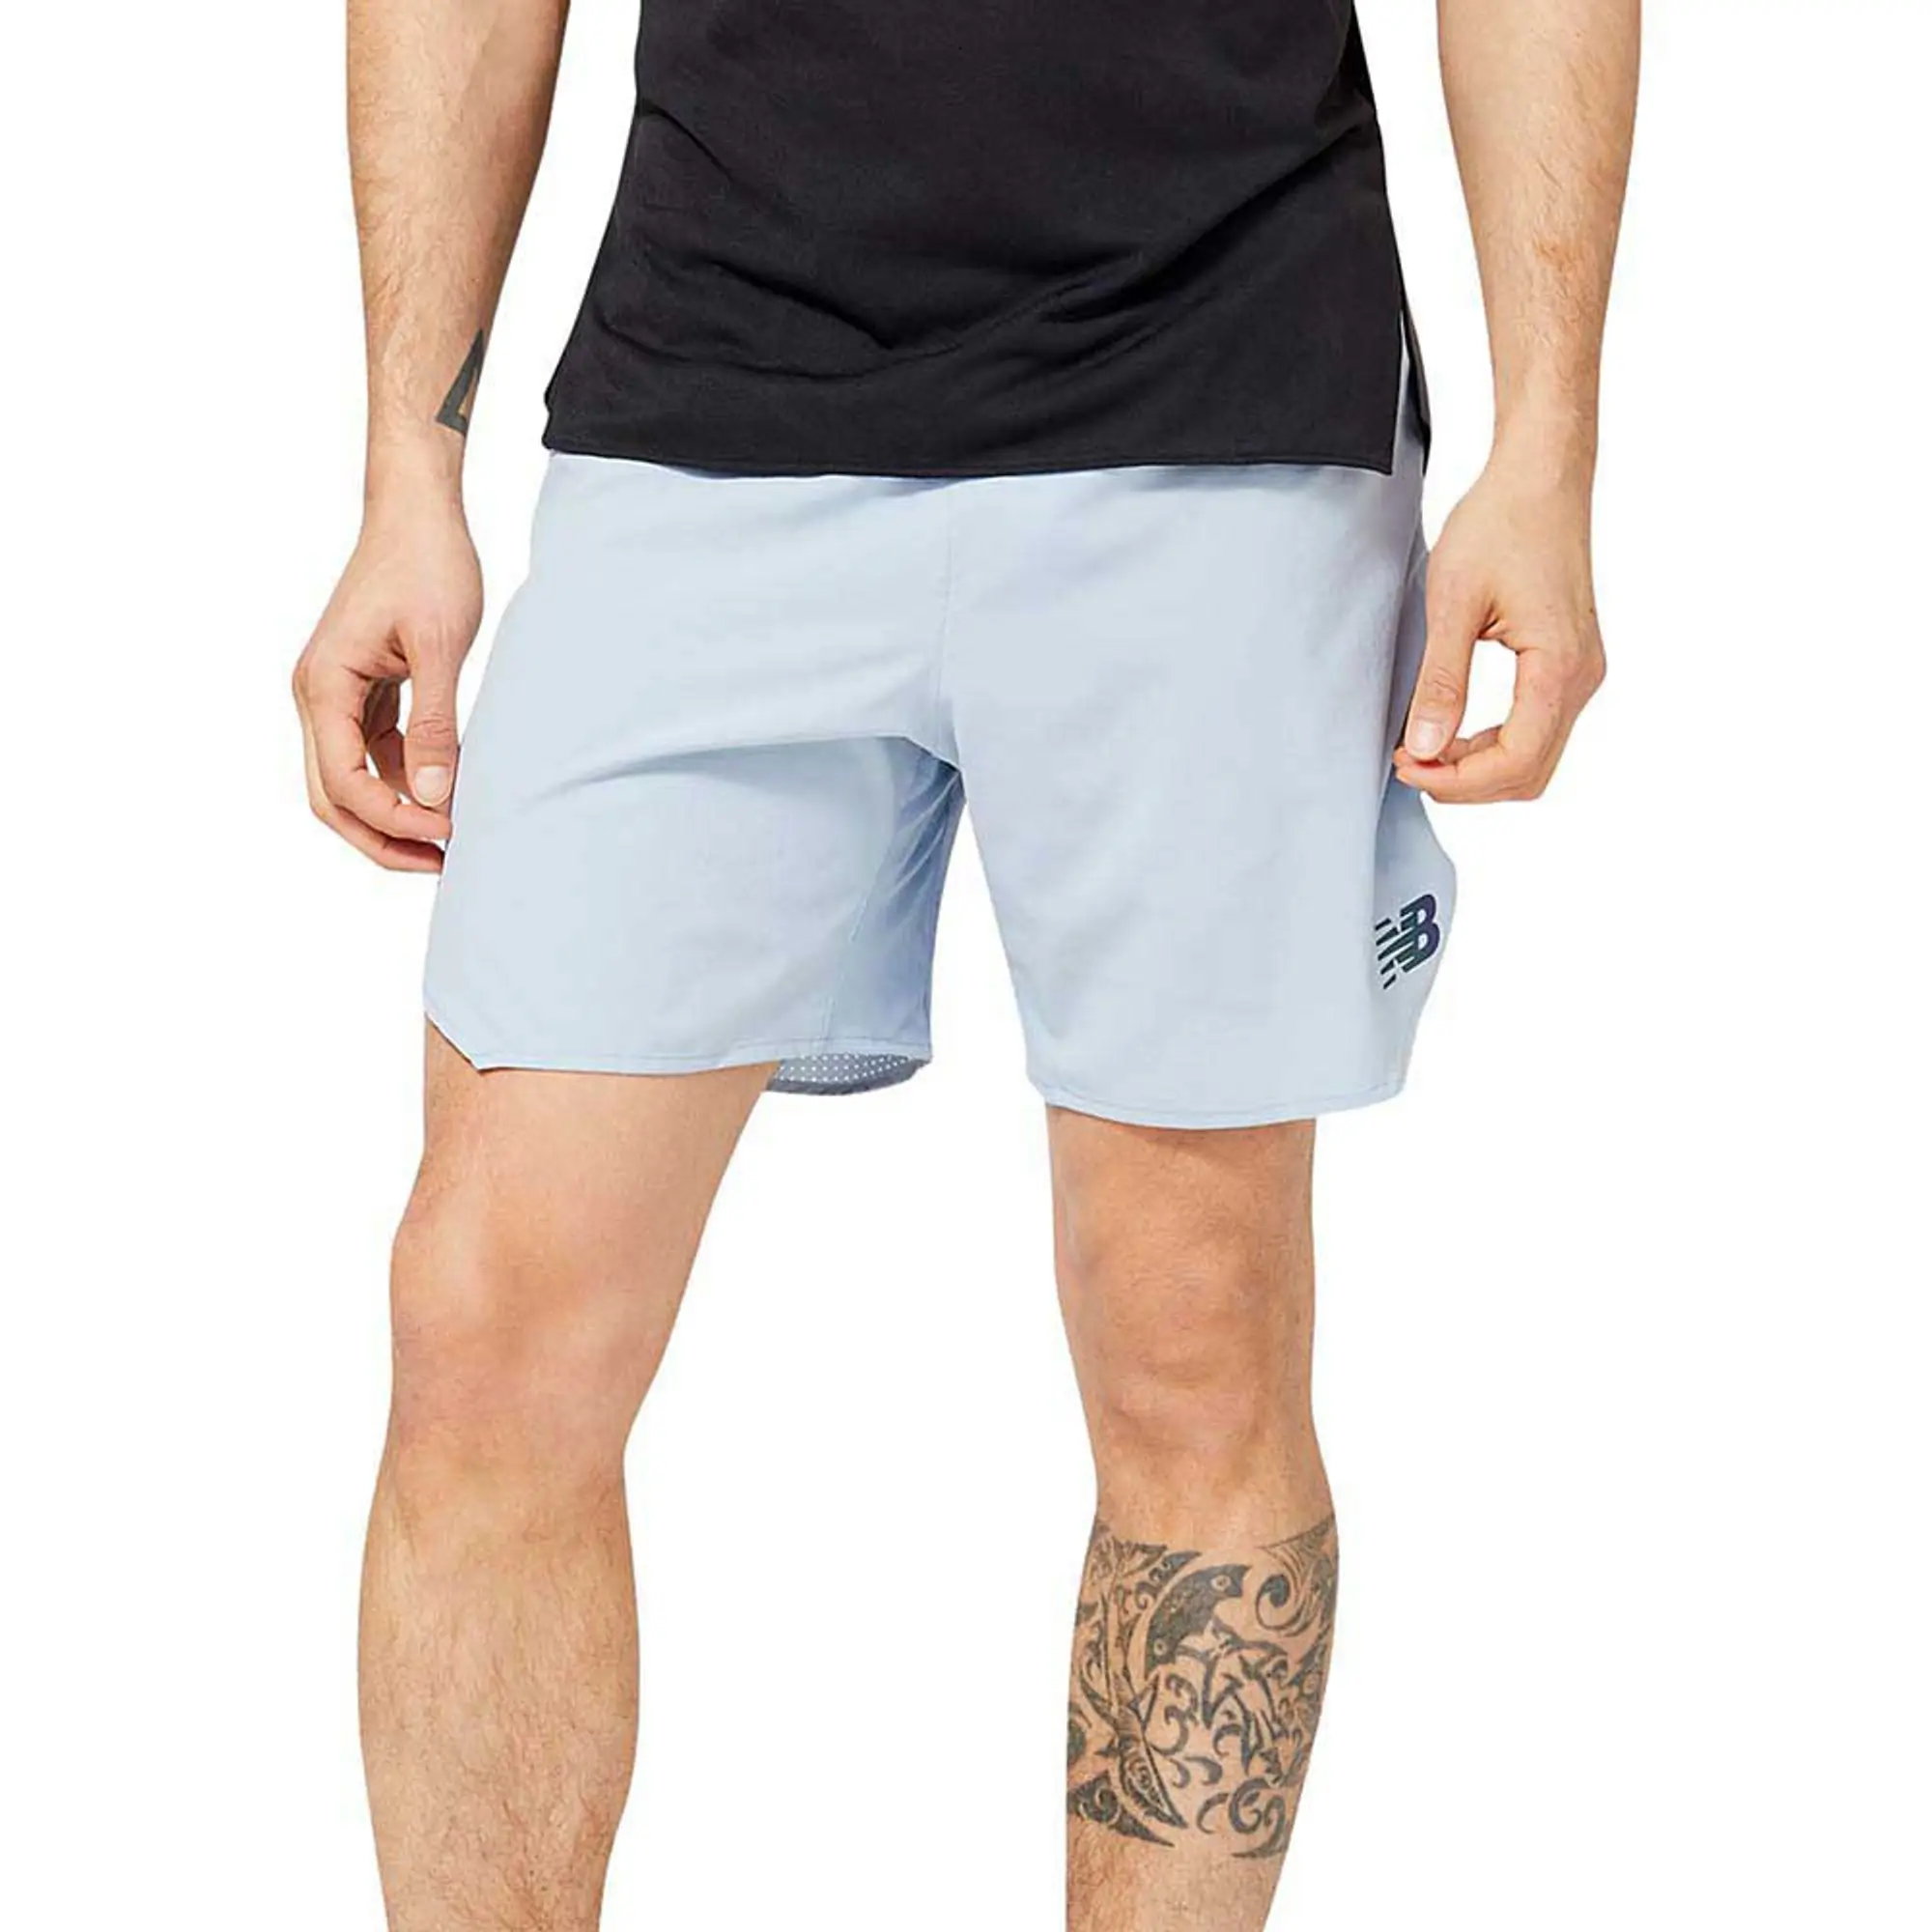 New Balance Q Speed 7 No Liner Shorts - Grey, MS23283